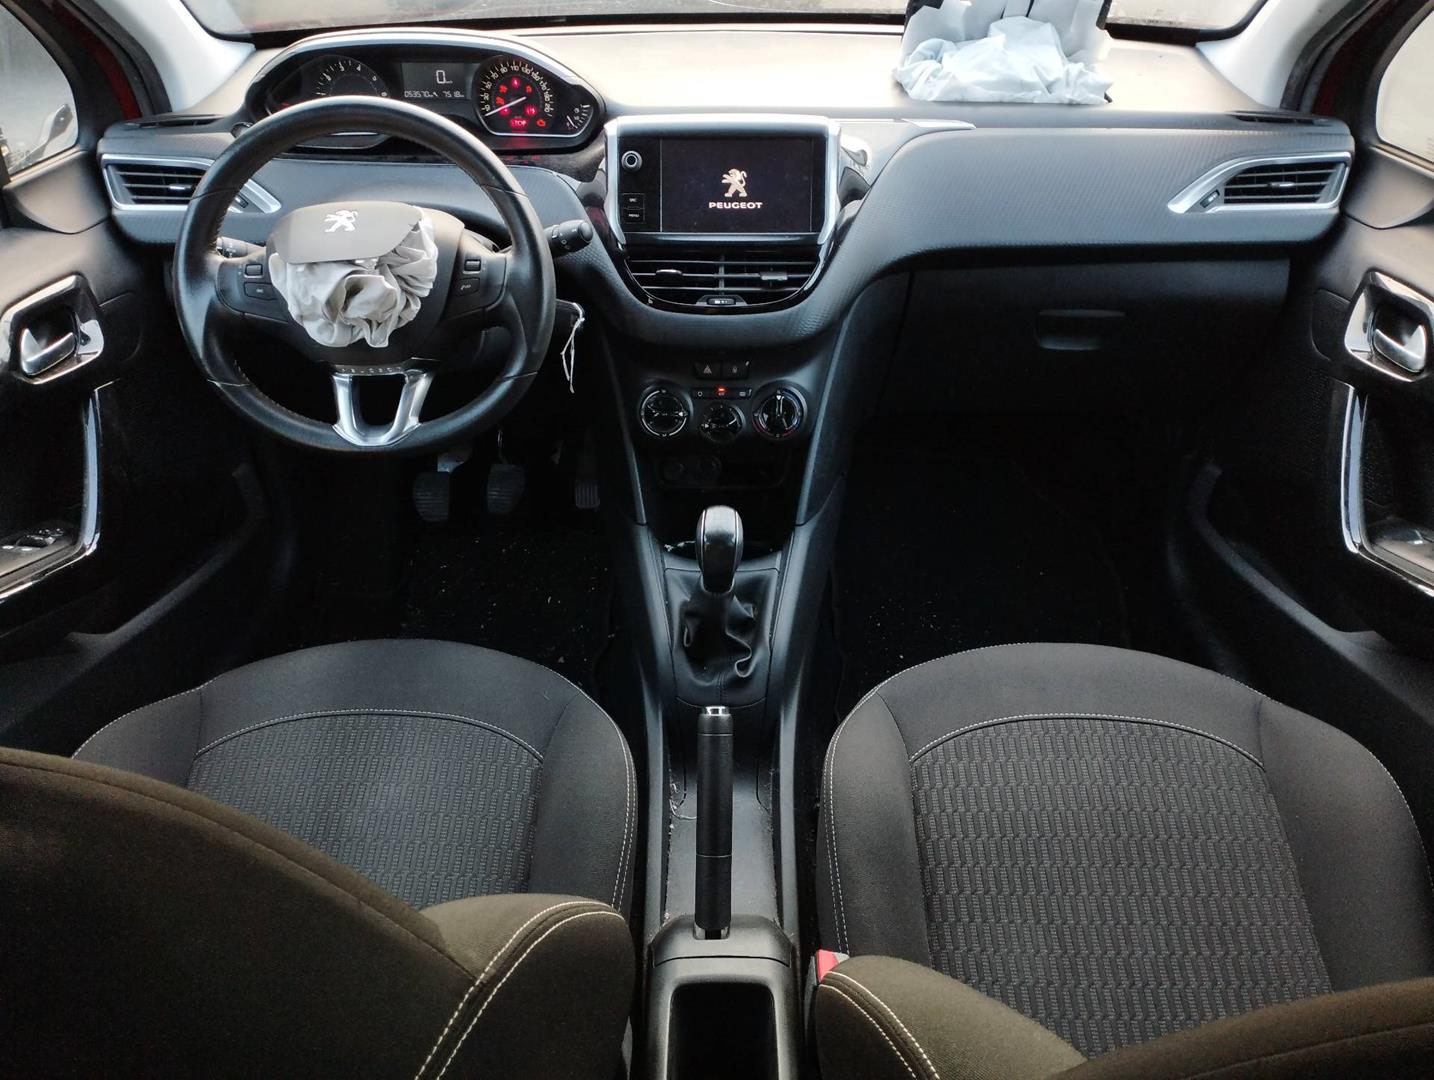 PEUGEOT 208 Peugeot 208 (2012-2015) Gearbox 20A701, 53570KM 22289650